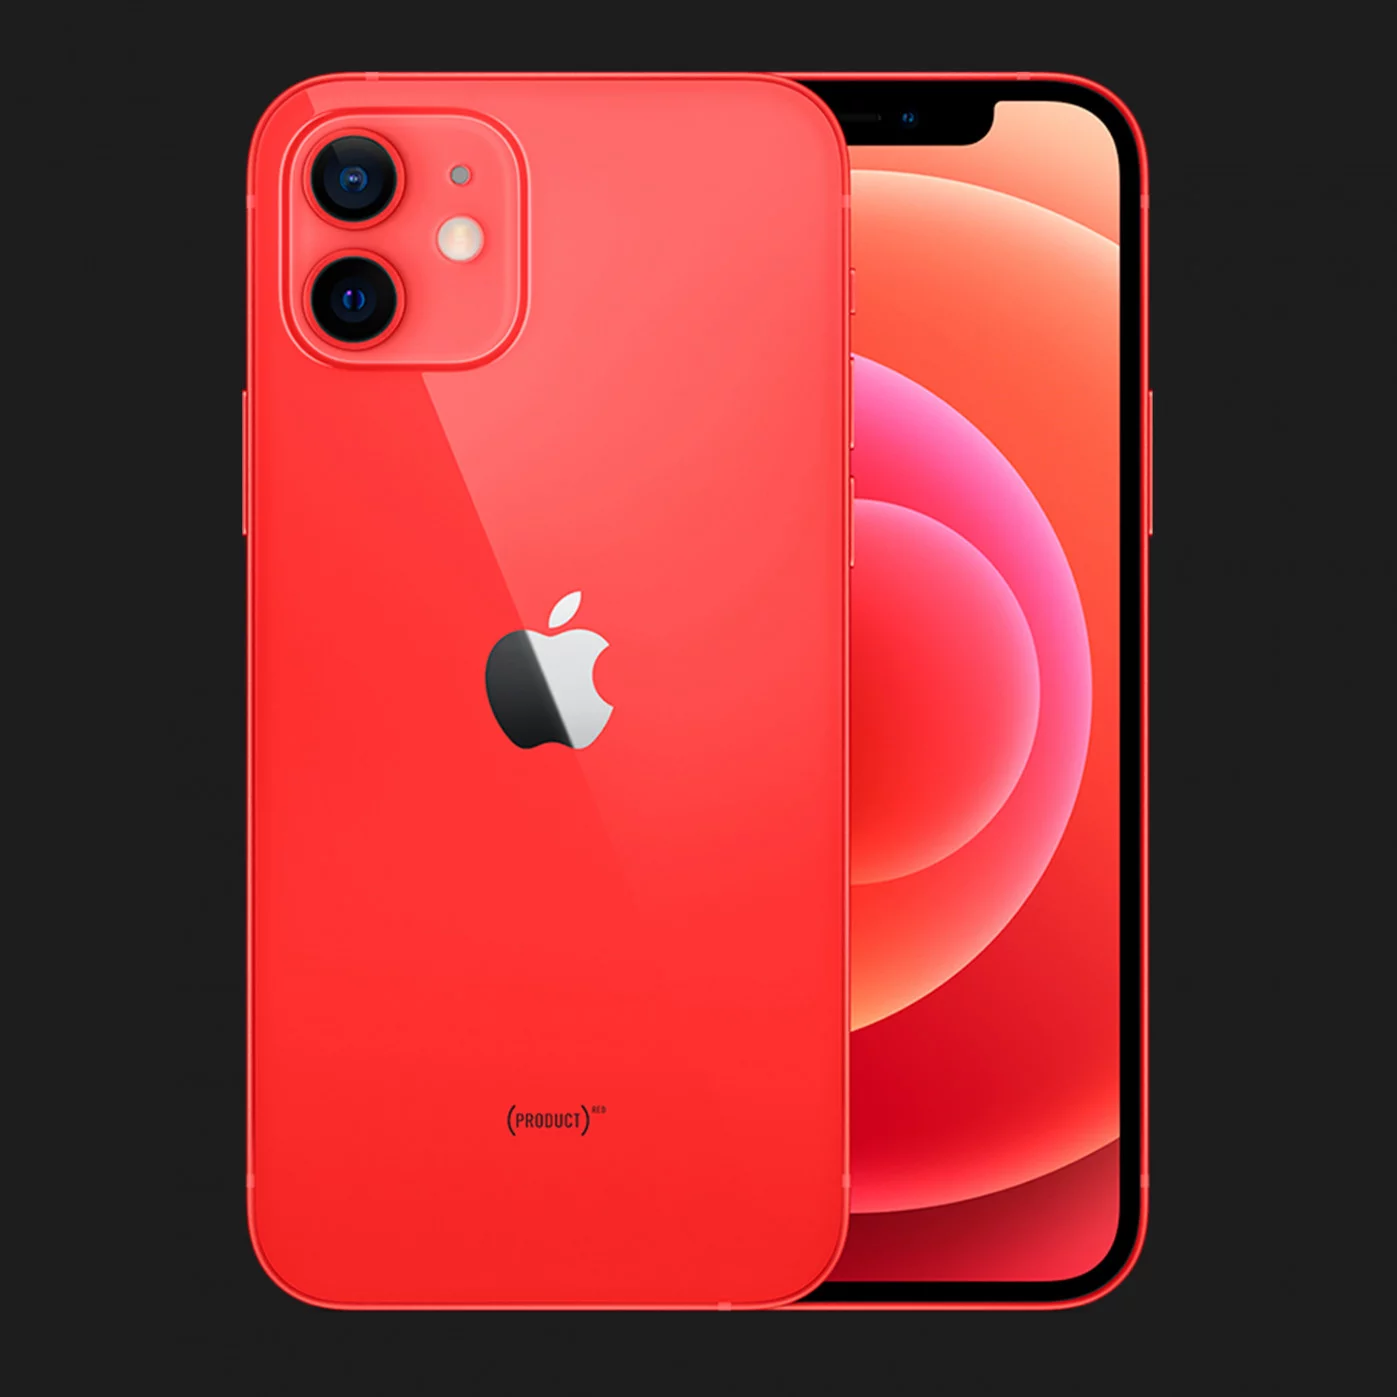 Купить Apple iPhone 12 mini 64GB (PRODUCT) RED — цены ⚡, отзывы ⚡,  характеристики — ЯБКО